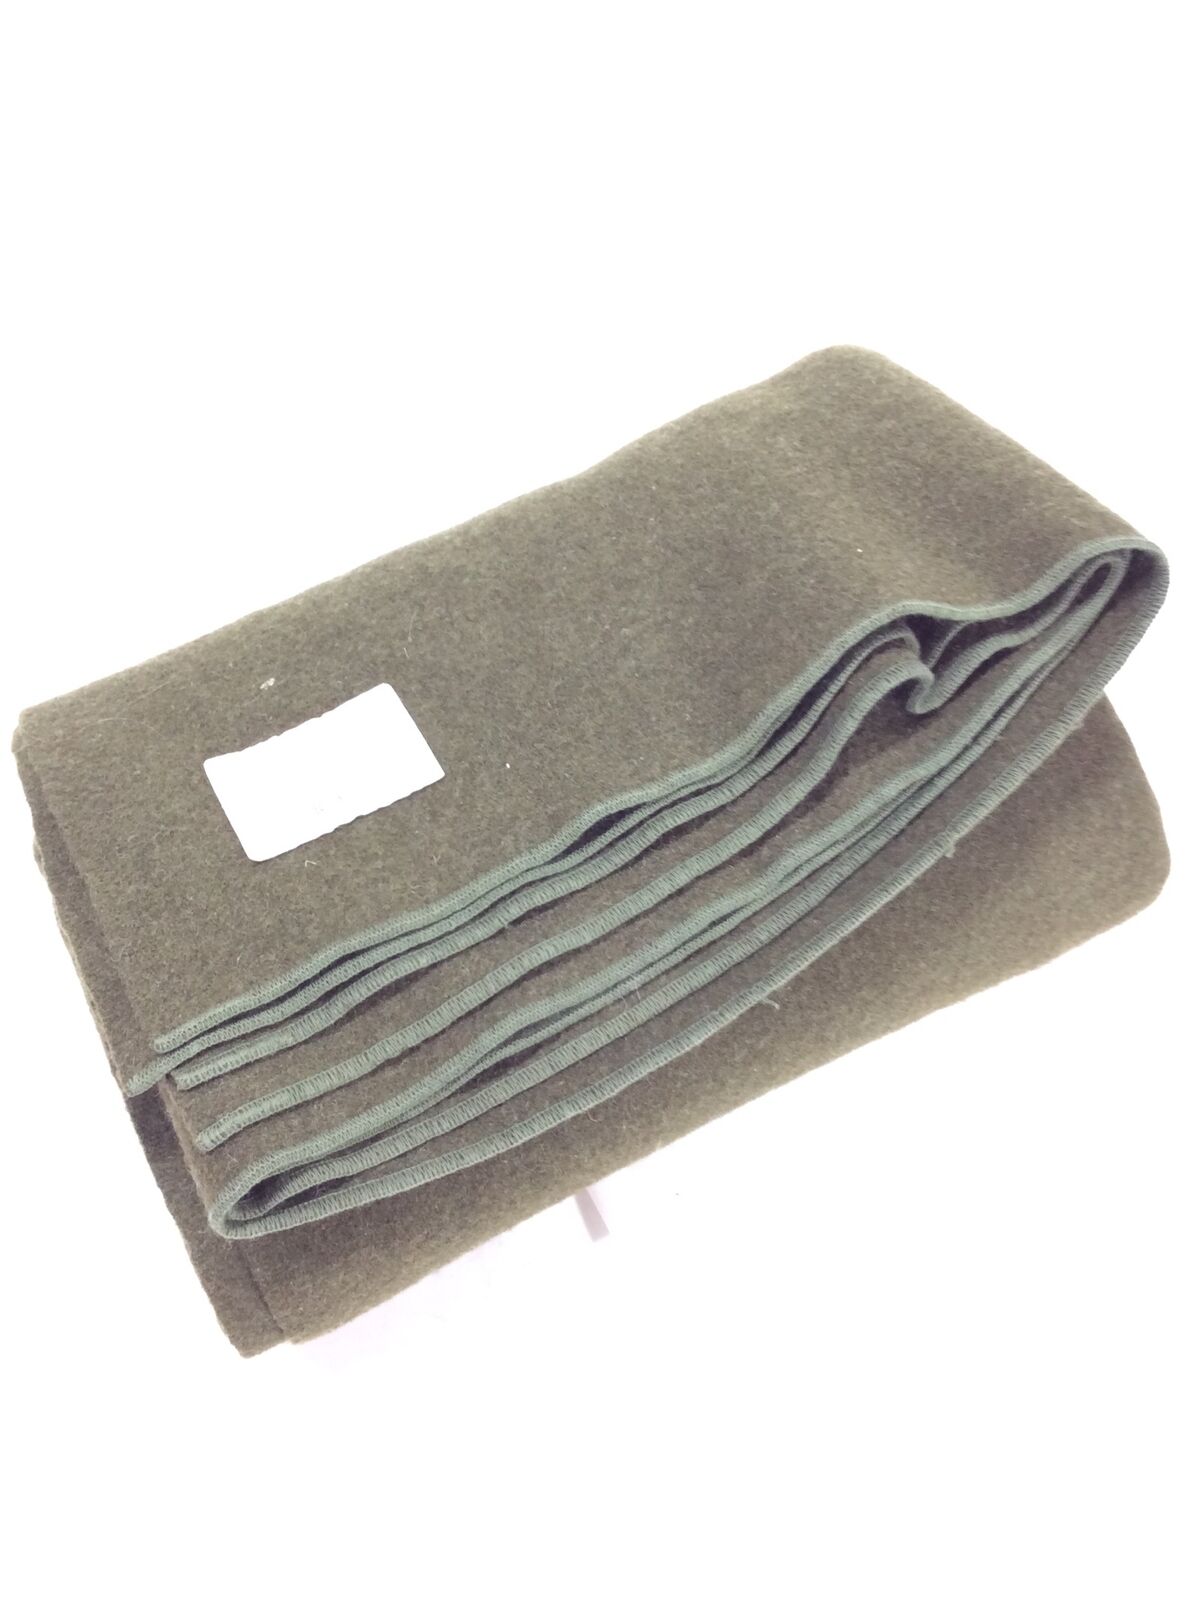 Original USGI Wool Blanket 66”x 84” Unicor Military Field Blanket US Army Issue